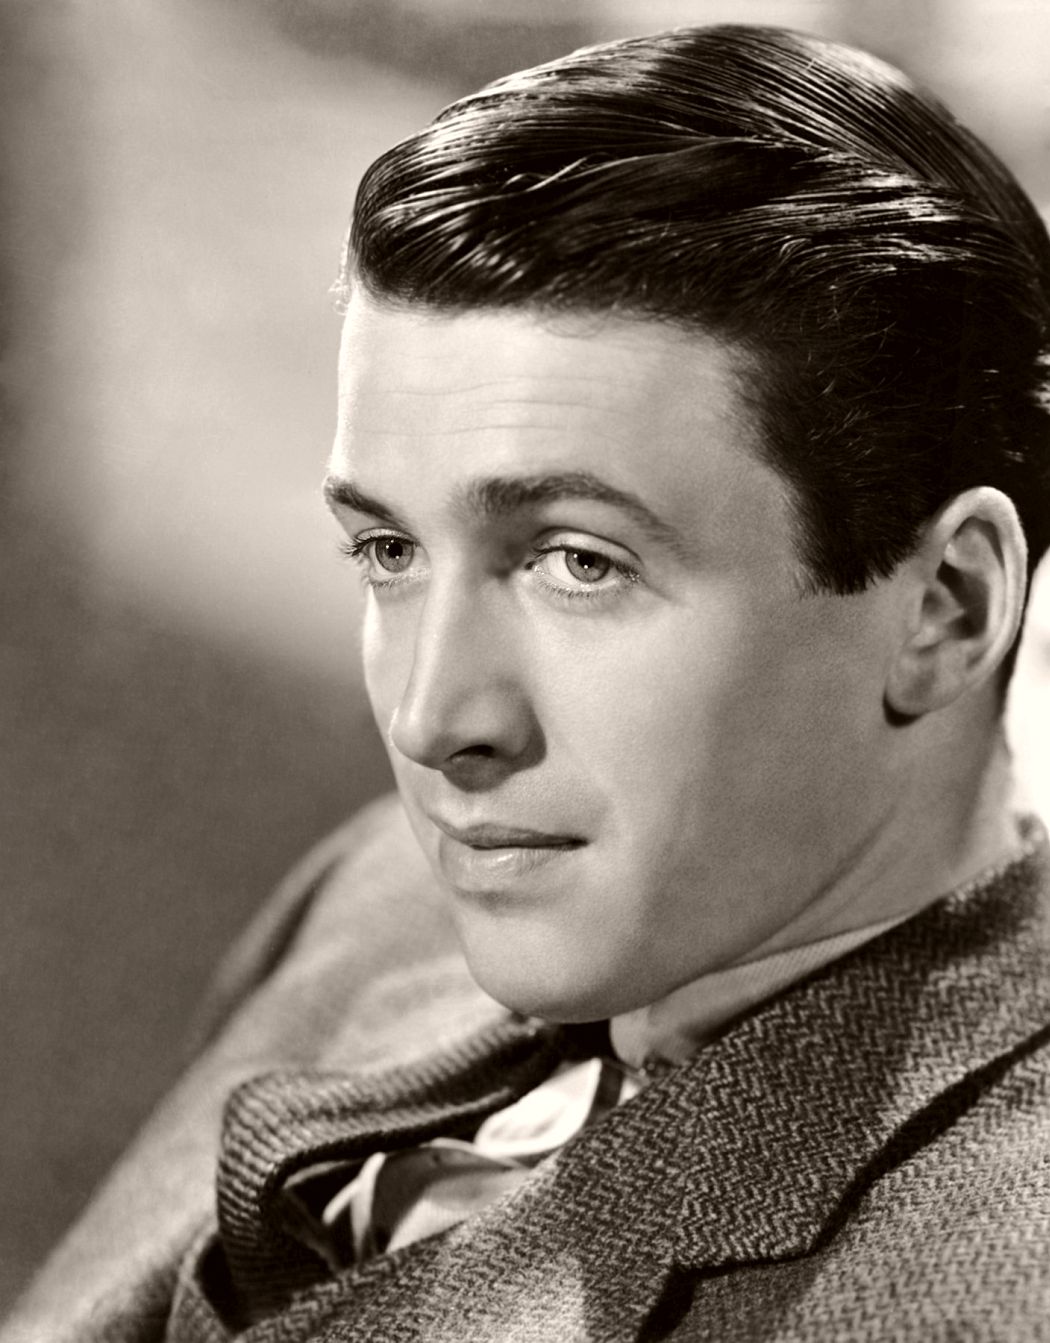 Vintage 1930s American Hollywood Actors Portraits